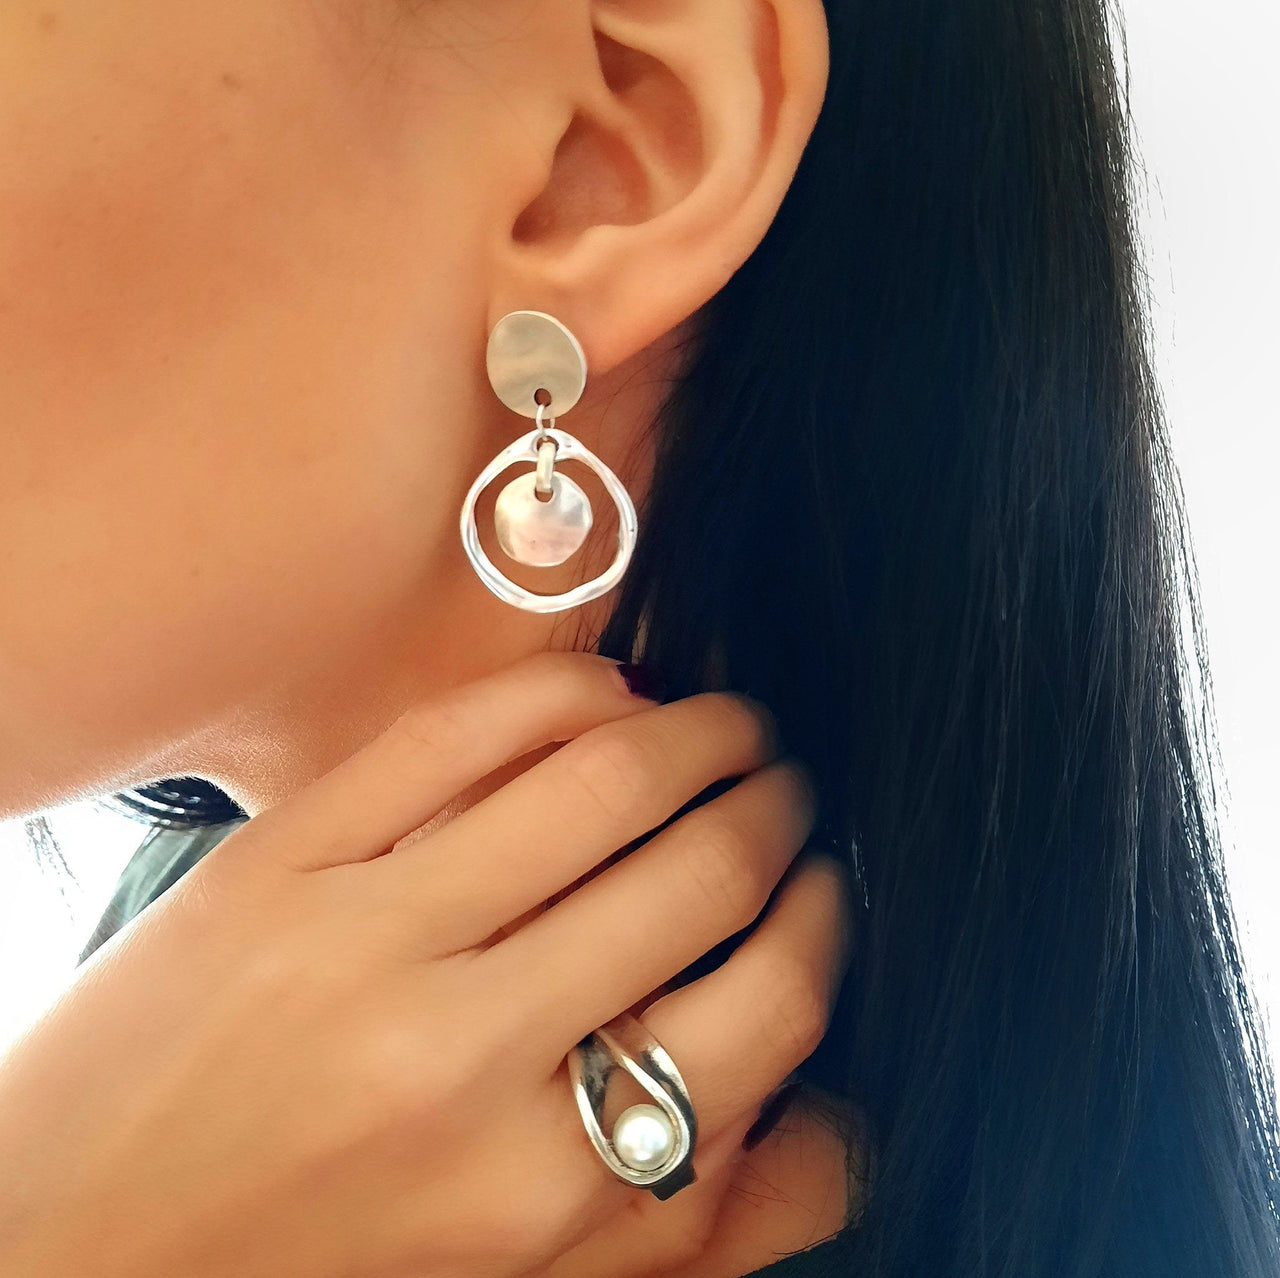 Moderne Silber Ohrringe für Frauen - The Limb Ohrringe KOOMPLIMENTS